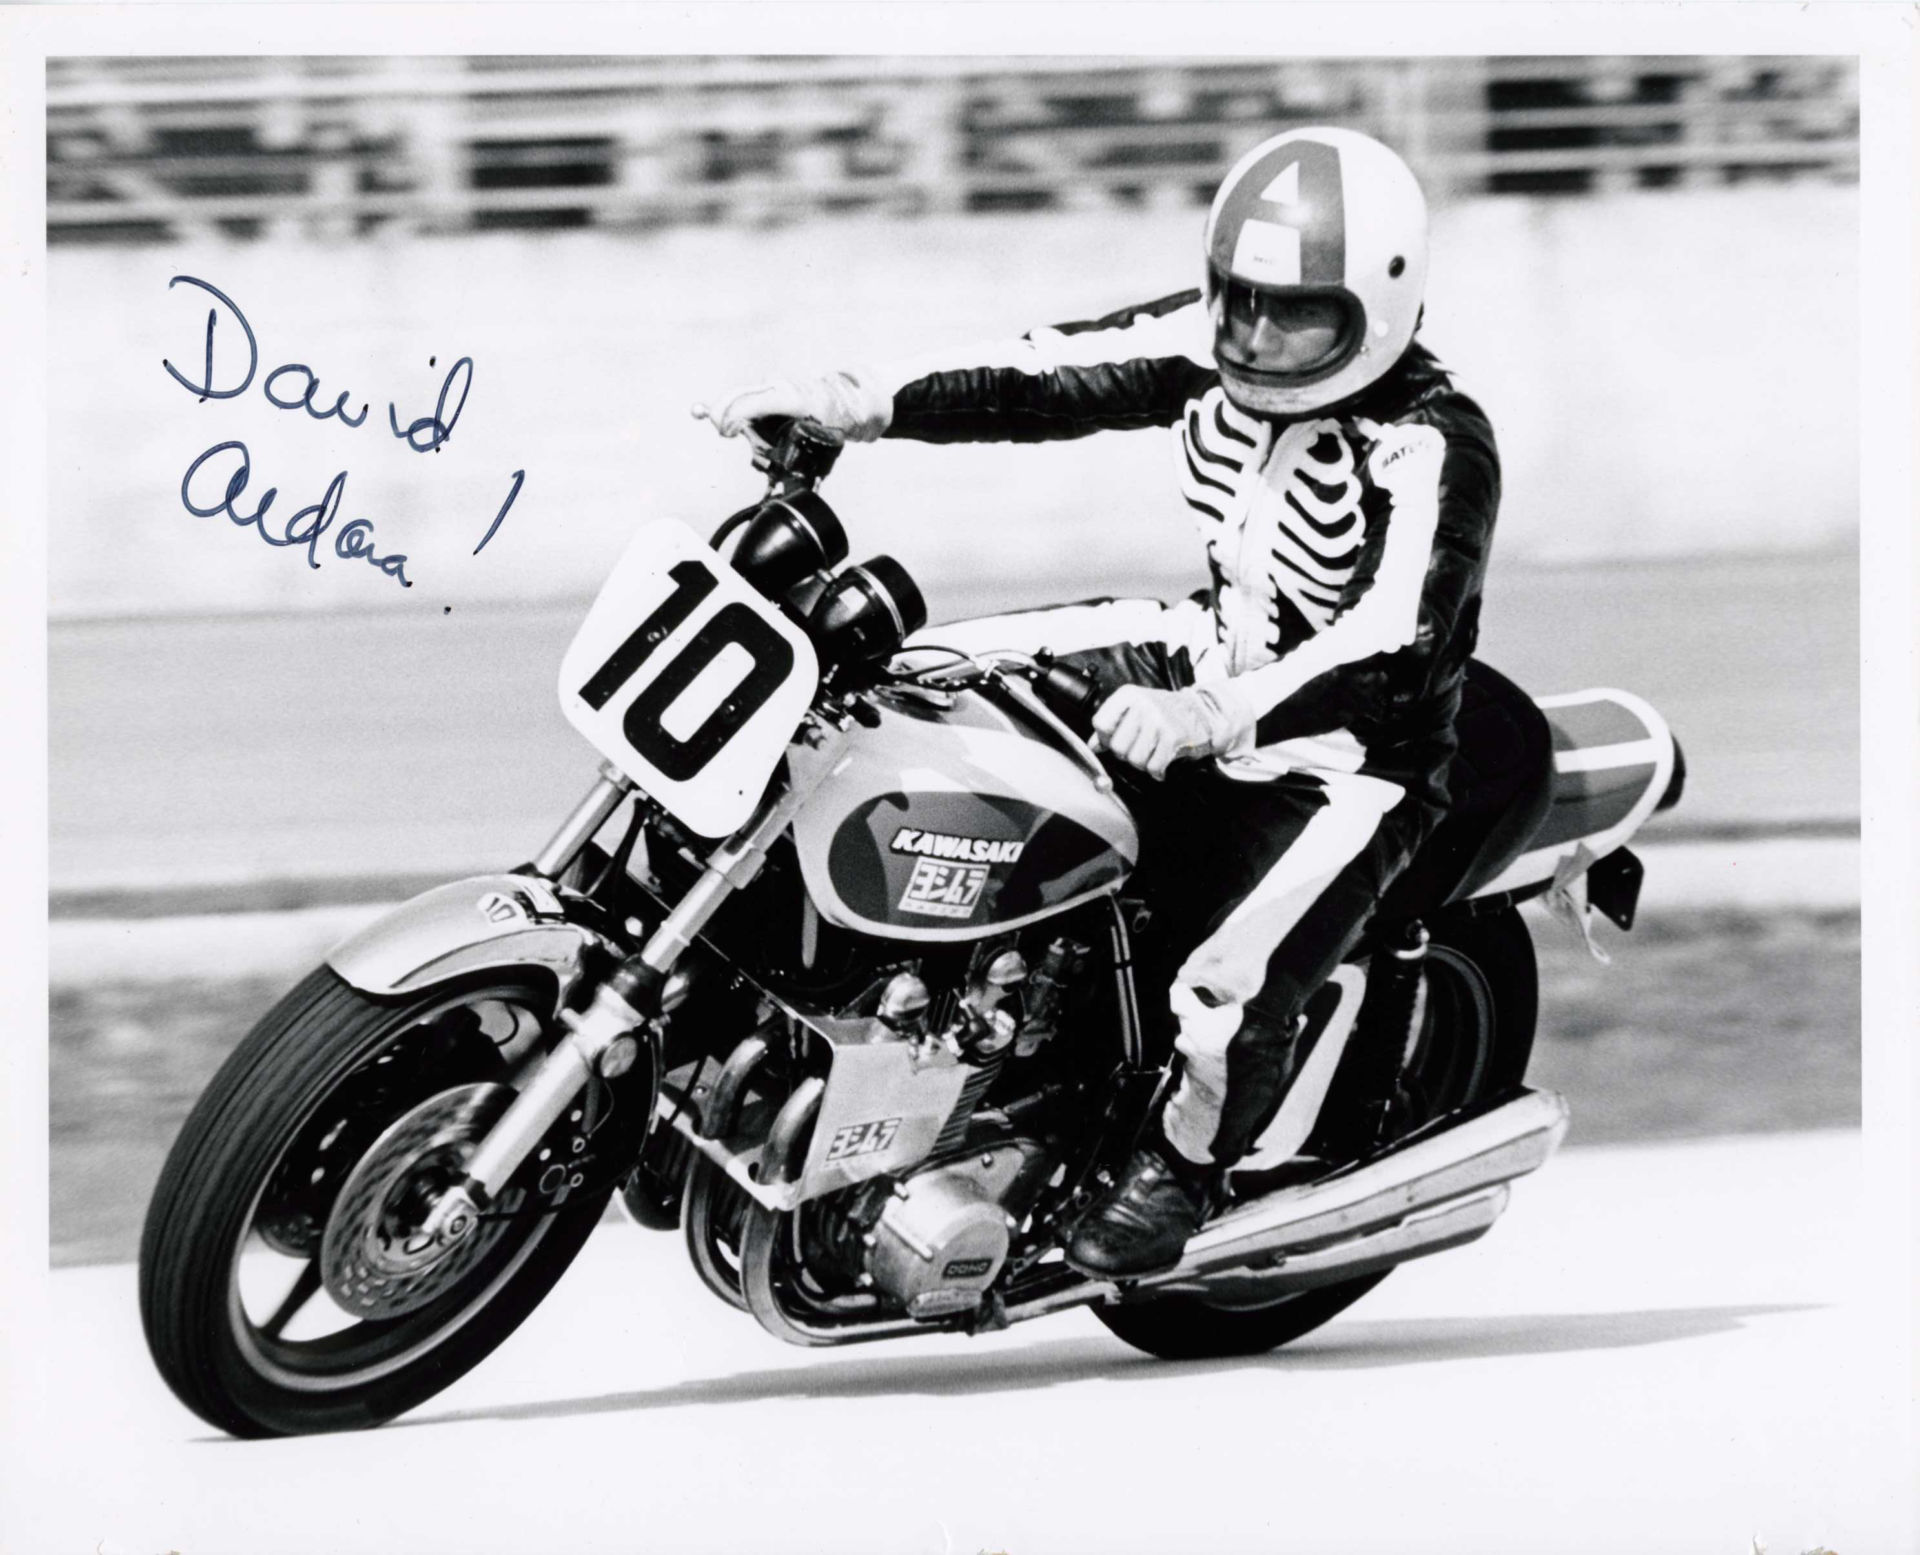 David Aldana (10) on a Kawasaki back in the day. Photo courtesy AMA.